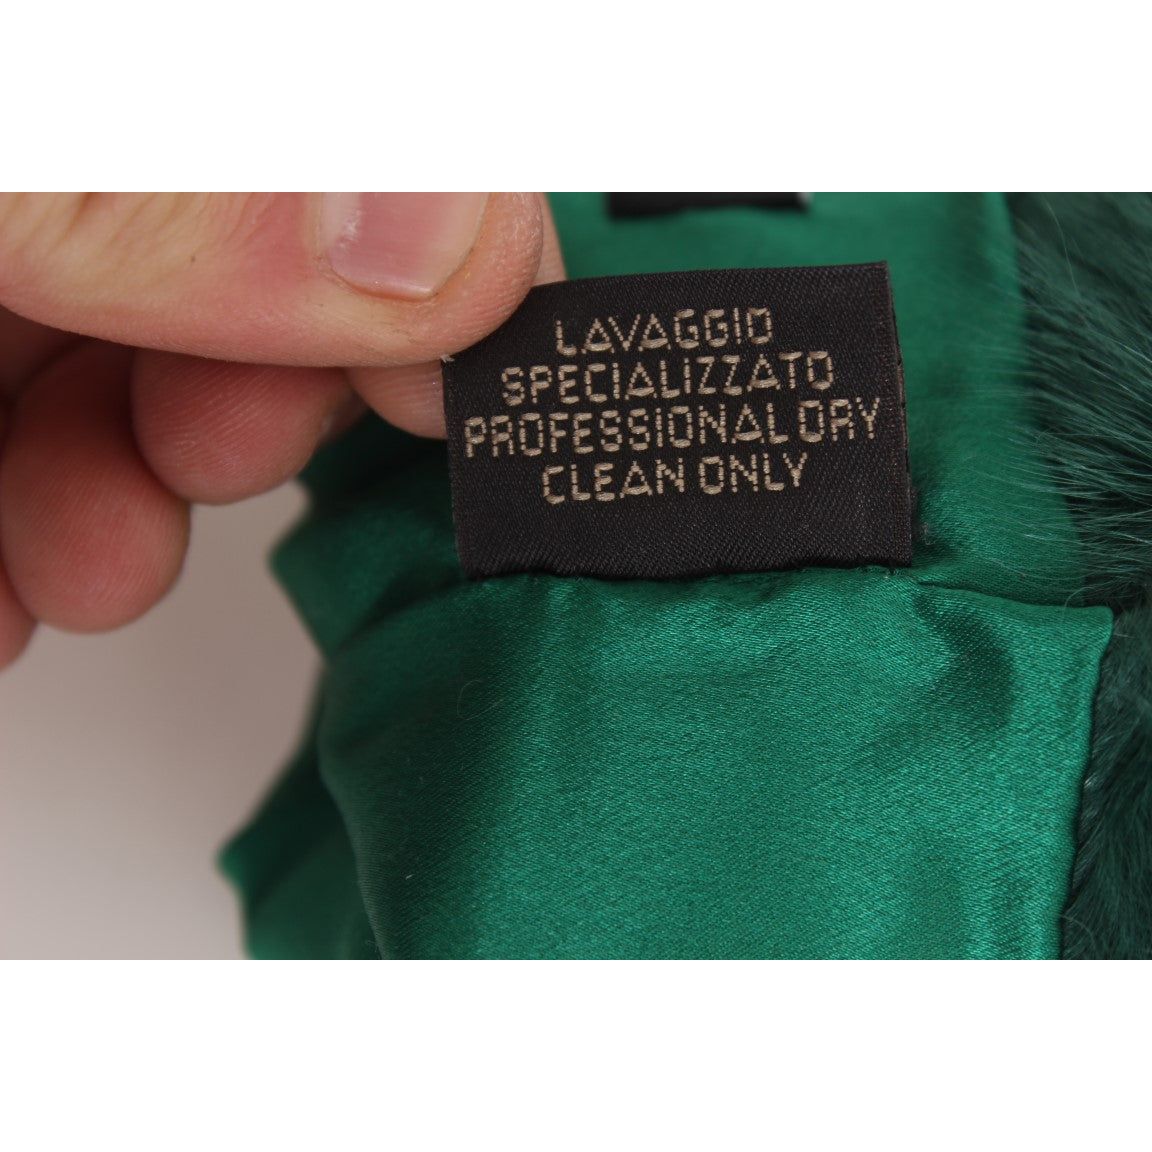 Dolce & Gabbana Elegant Elbow-Length Leather Gloves green-leather-xiangao-fur-elbow-gloves 332608-green-leather-xiangao-fur-elbow-gloves-7.jpg